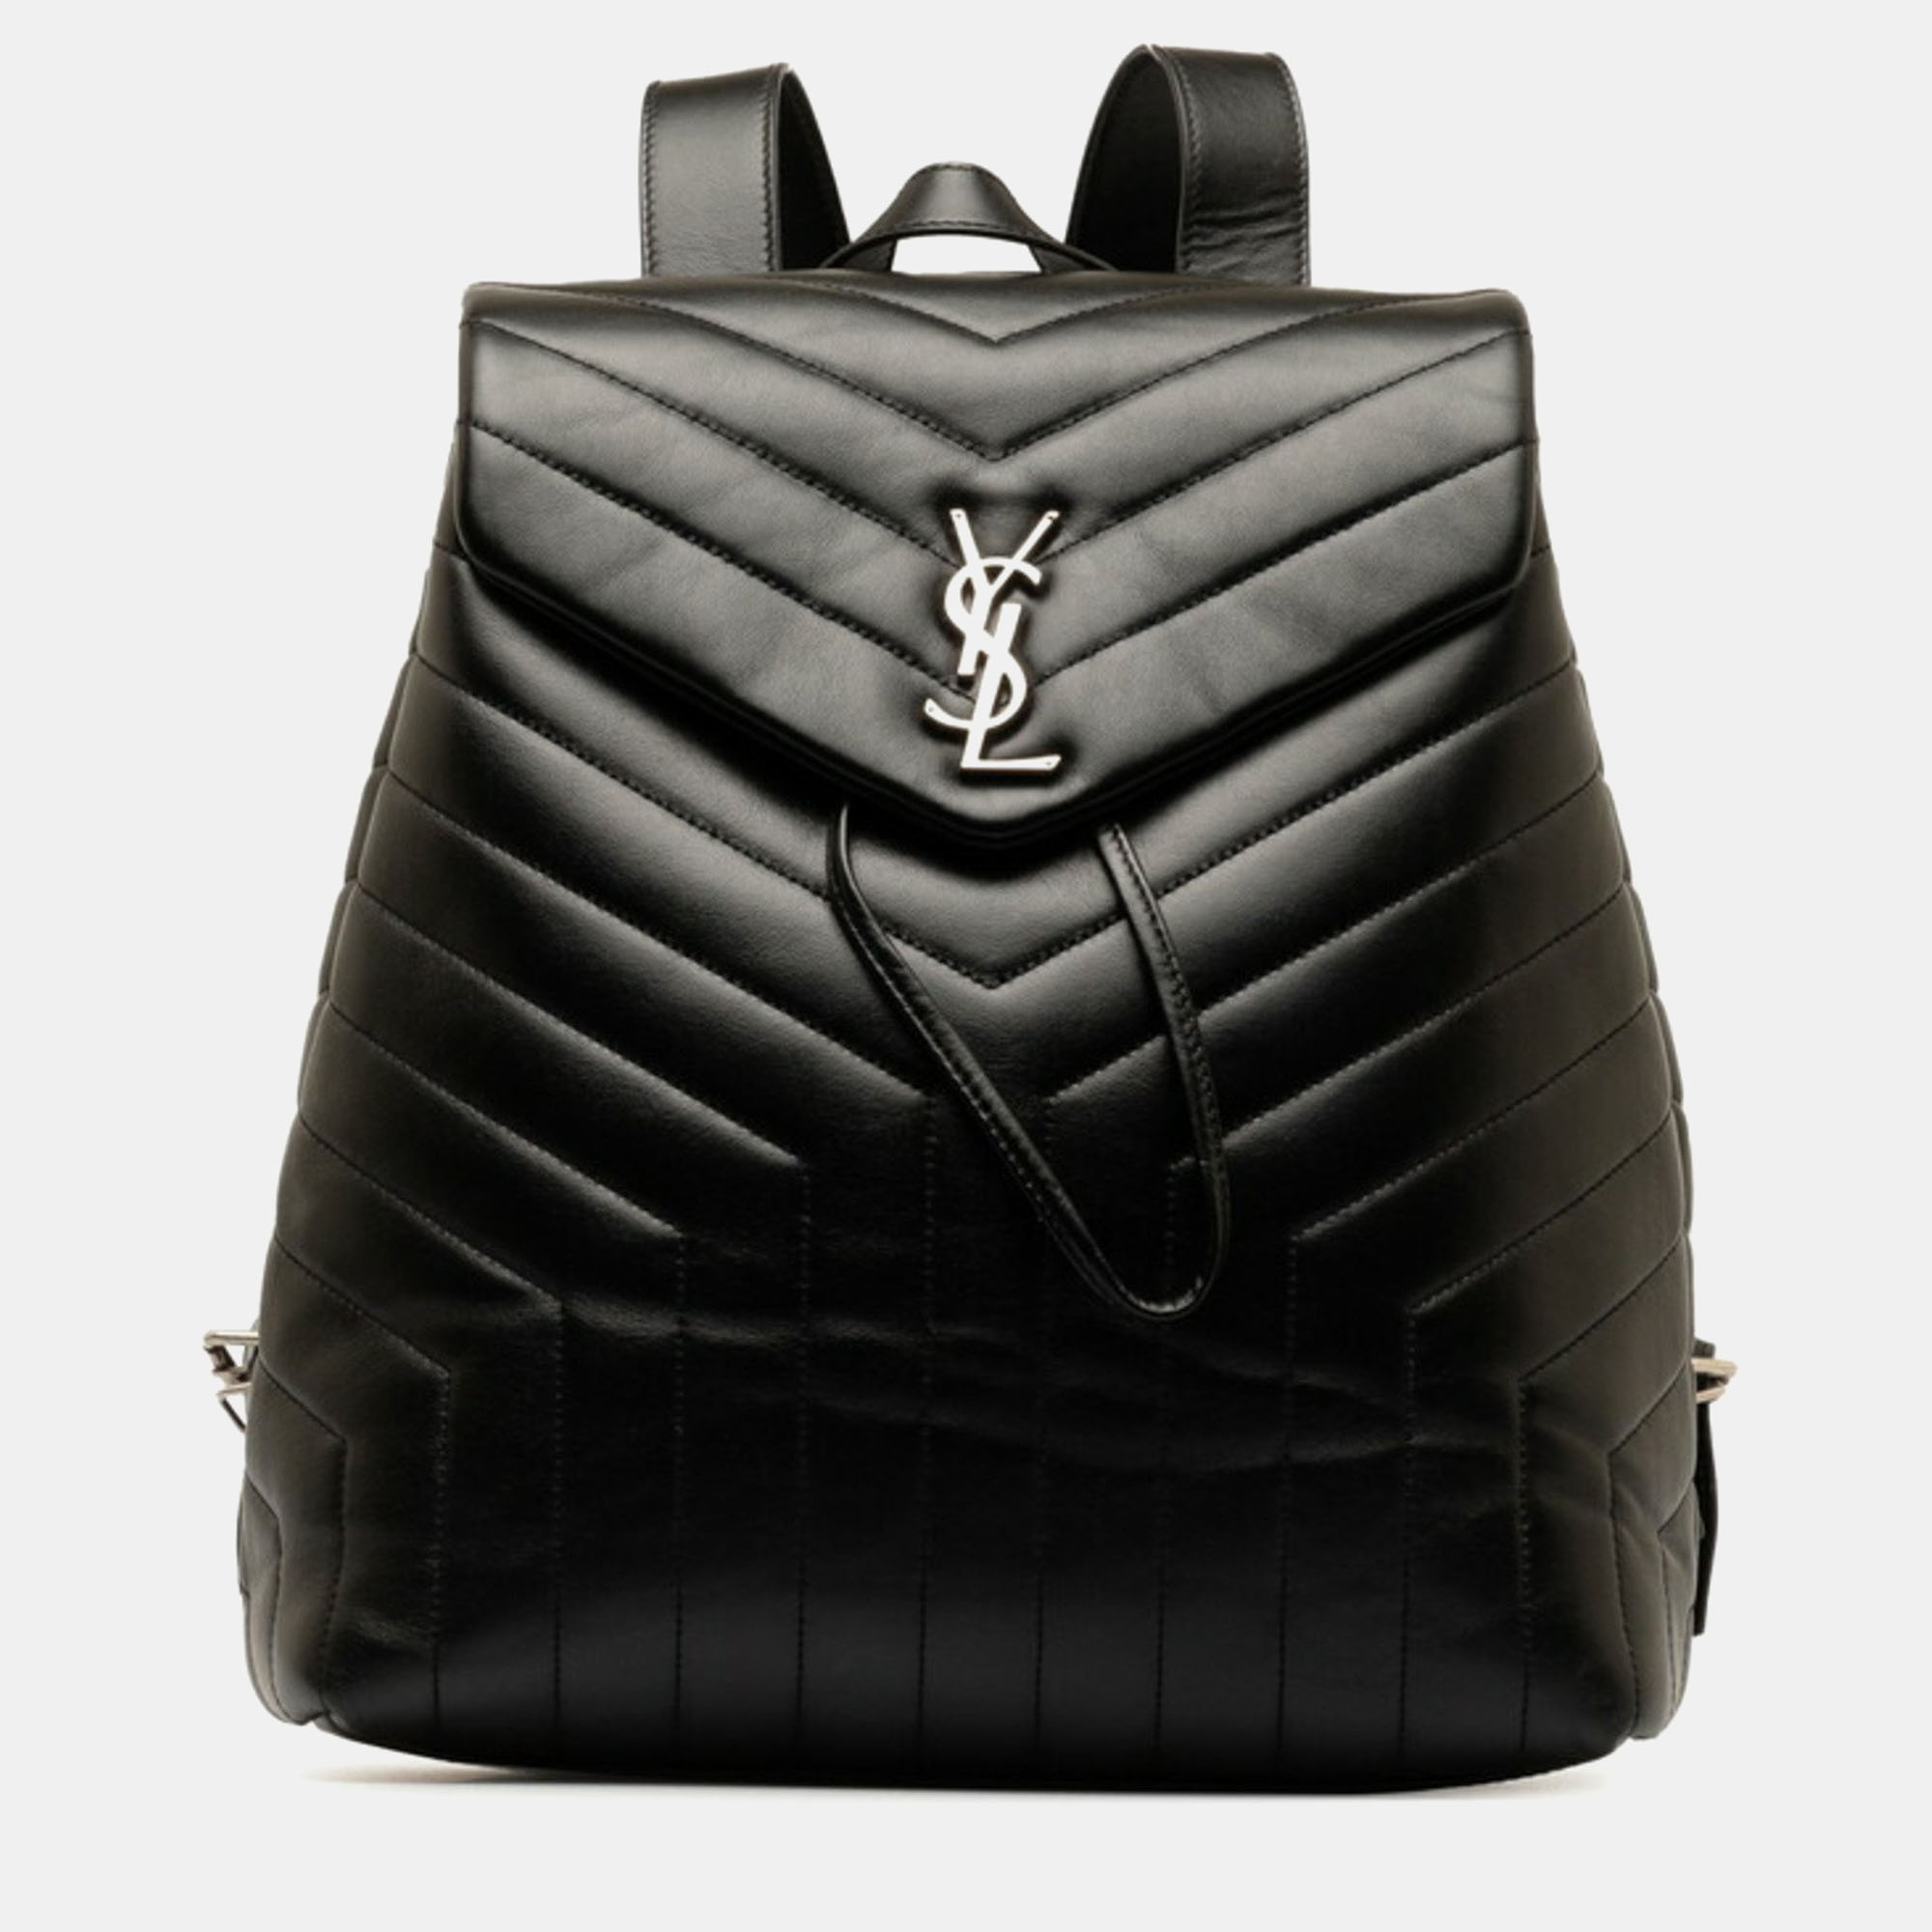 Saint laurent paris black leather medium loulou backpack